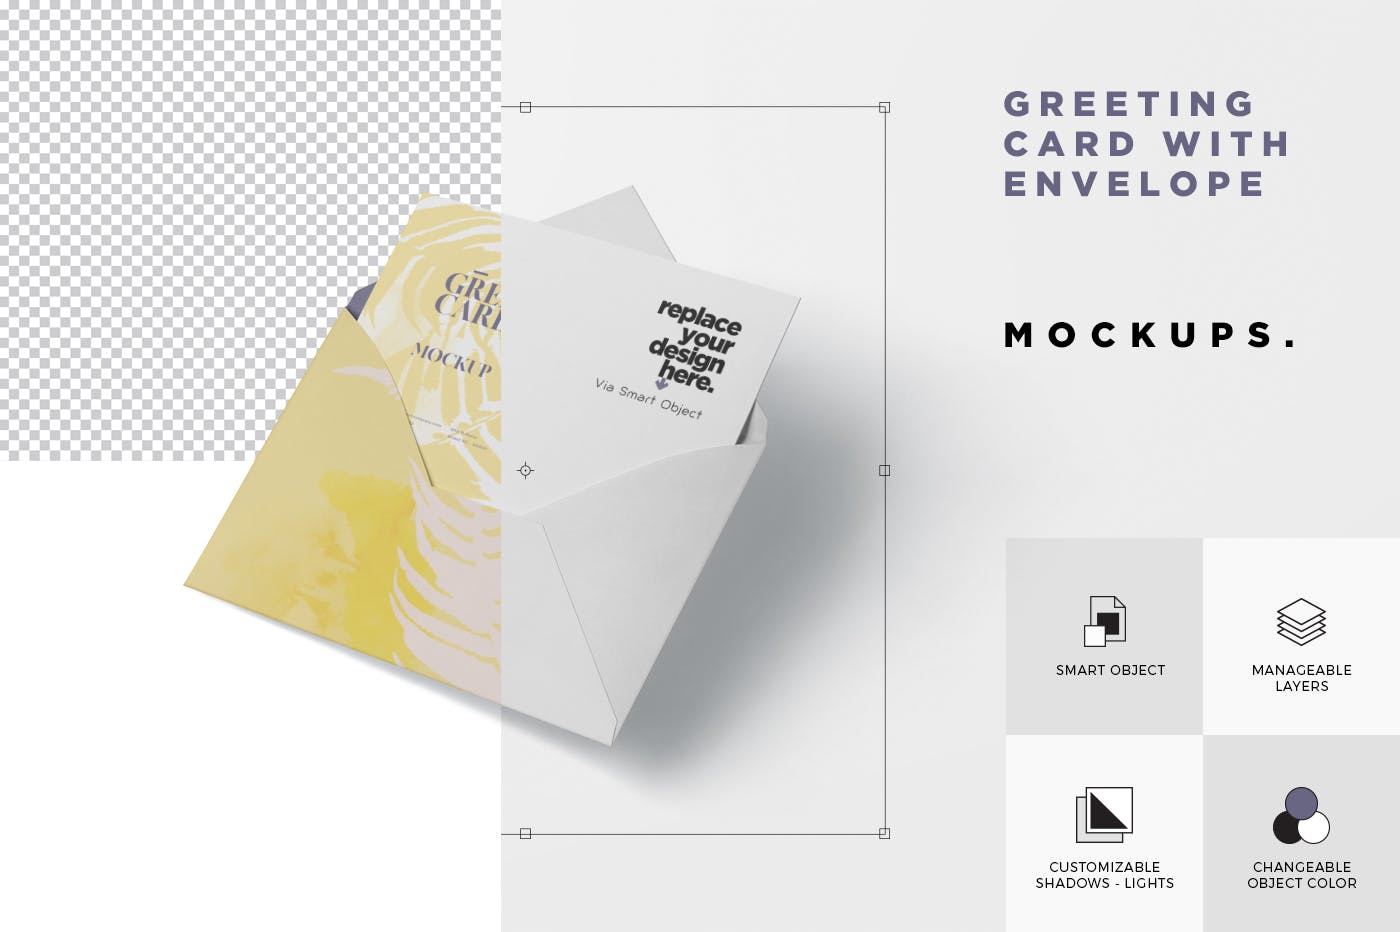 高端企业信封&贺卡设计图素材中国精选 Greeting Card Mockup with Envelope – A6 Size插图(5)